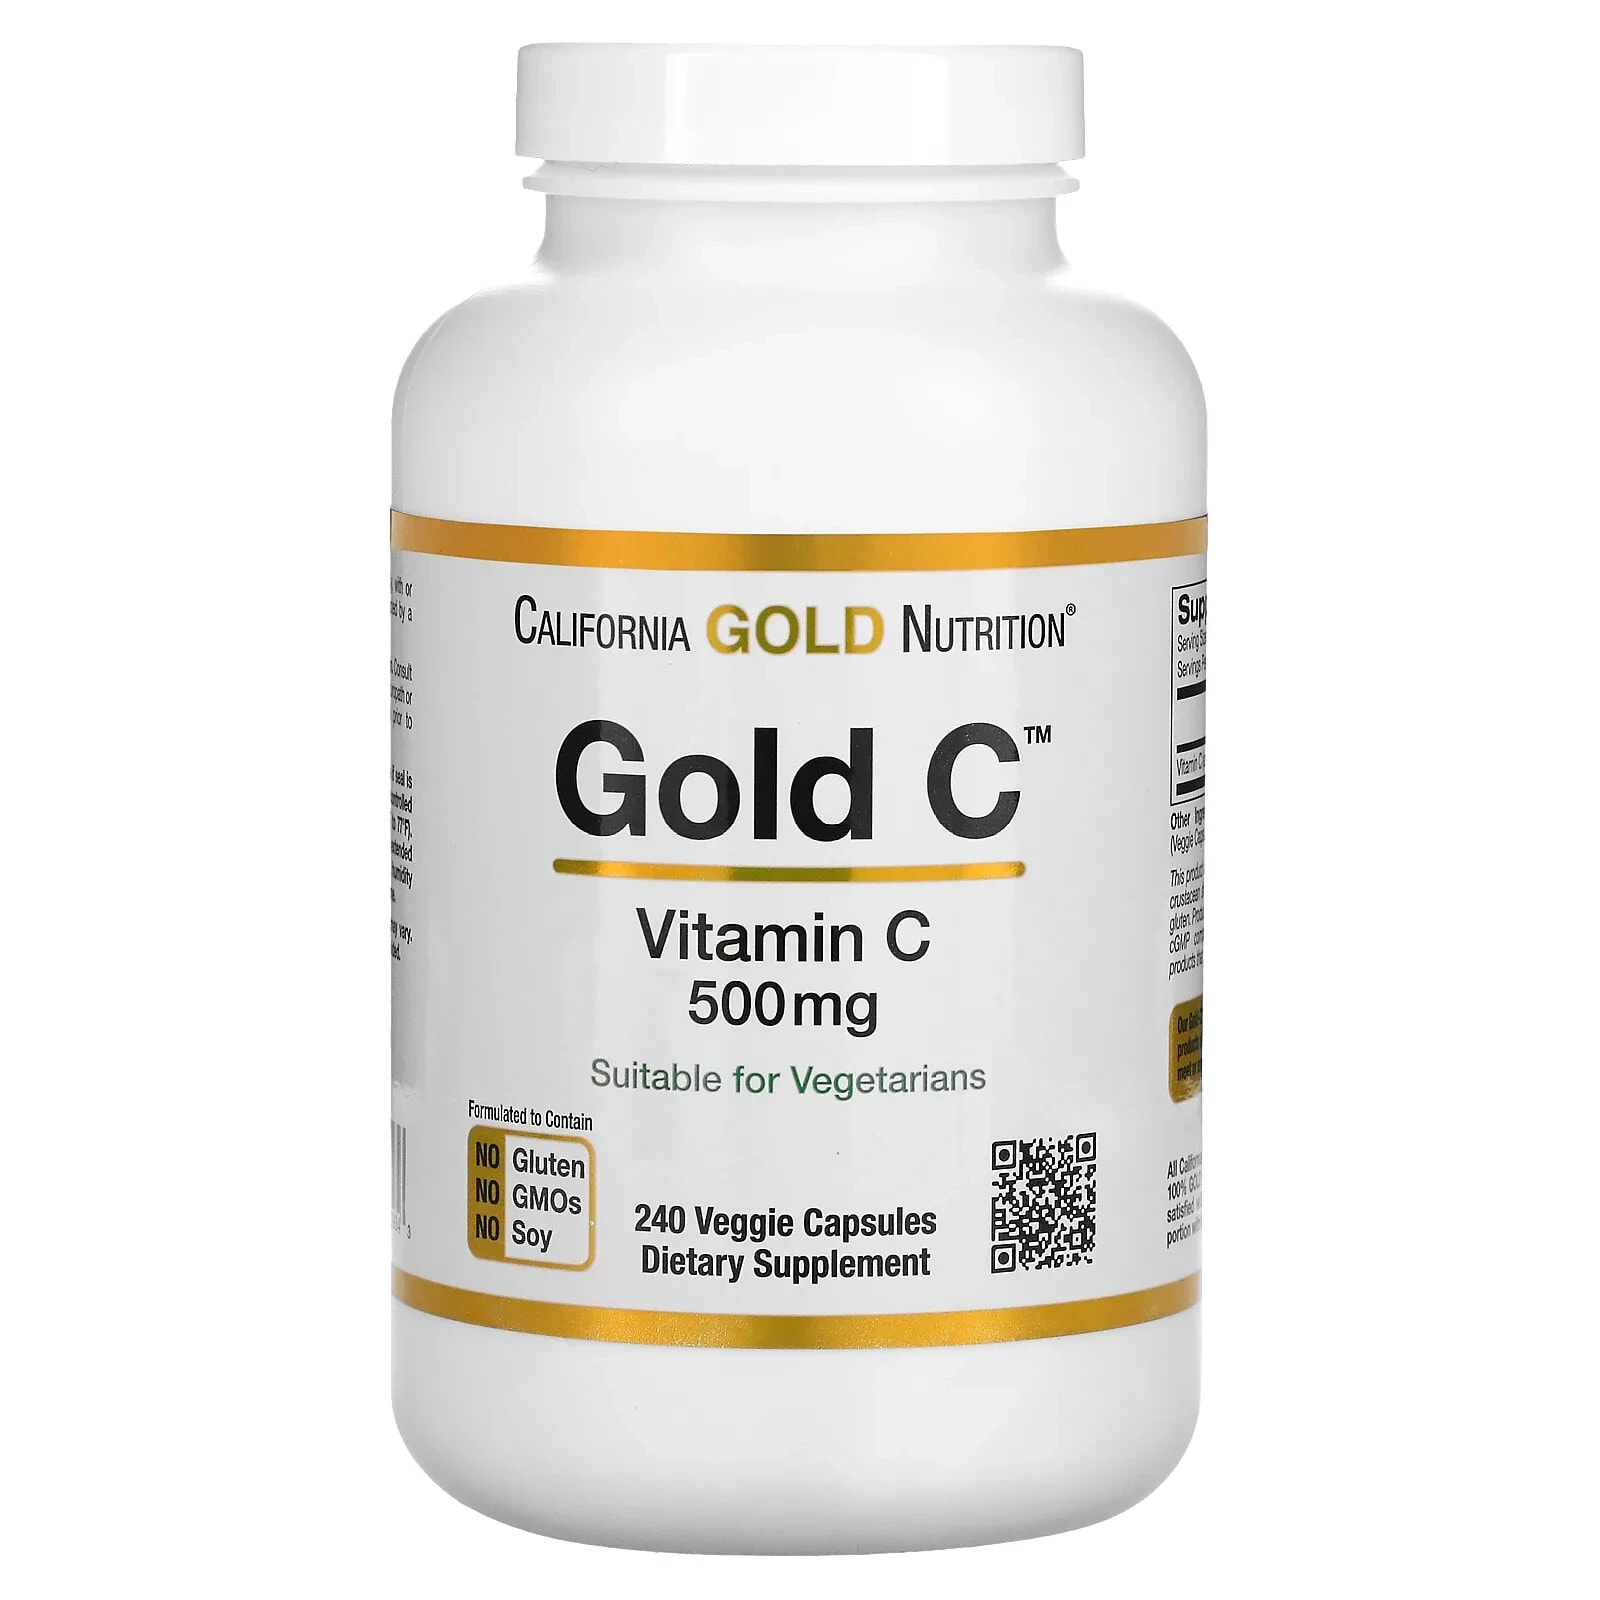 Gold C, USP Grade Vitamin C, 1,000 mg, 60 Veggie Capsules